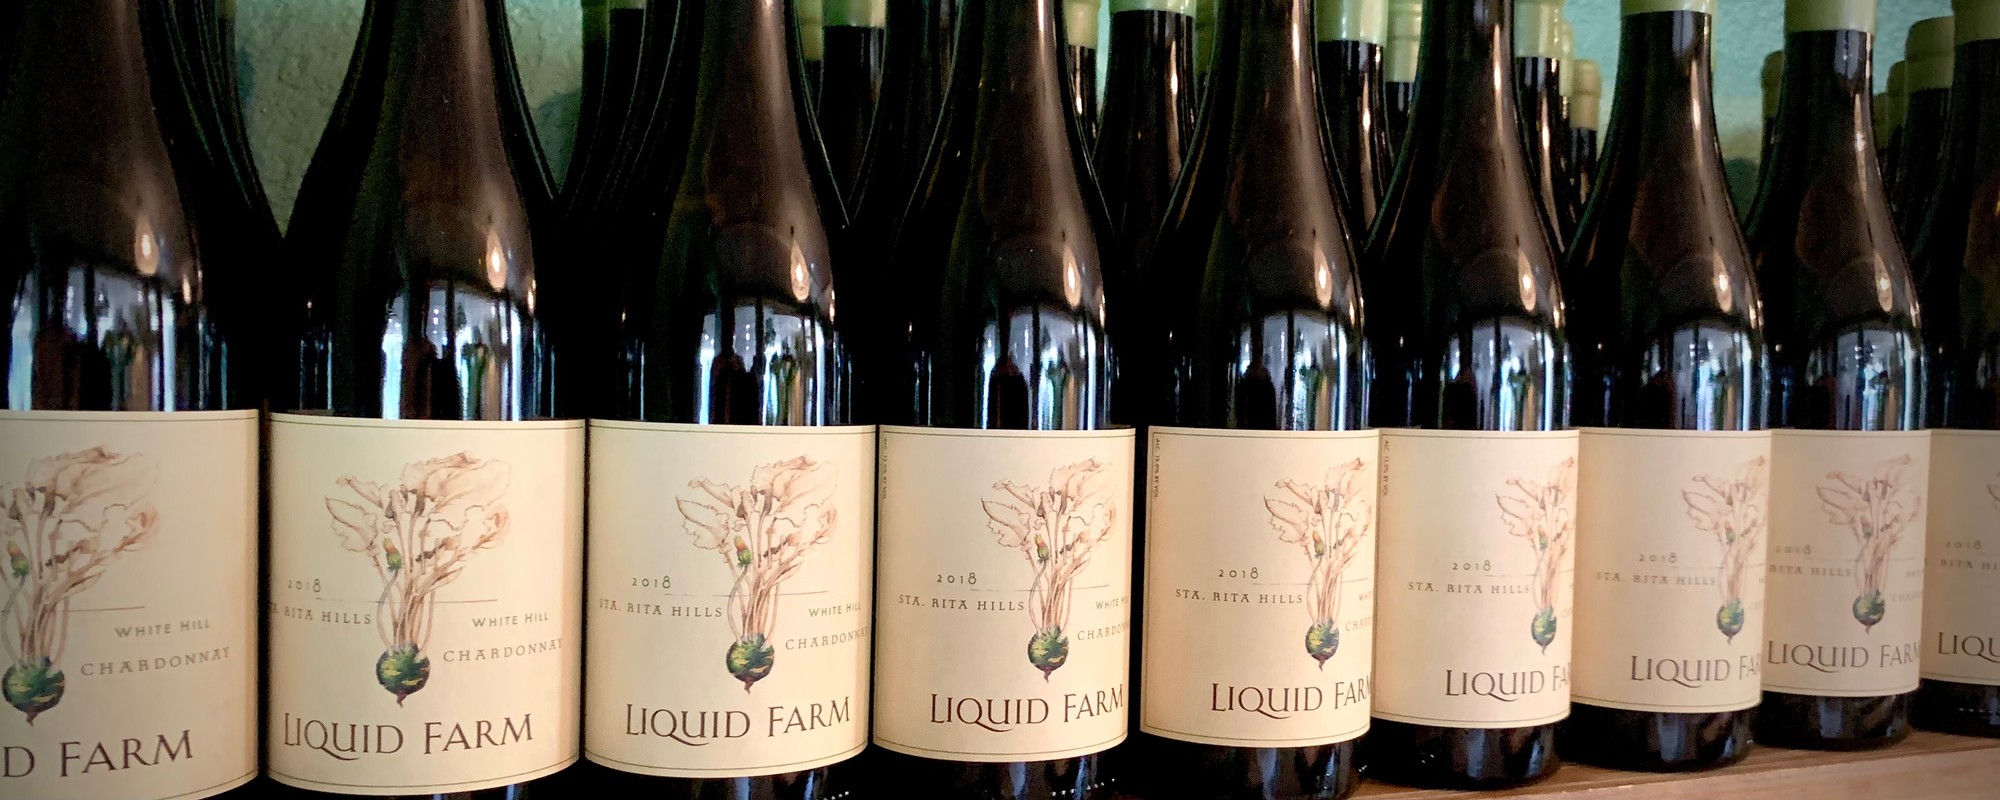 Liquid Farm wines